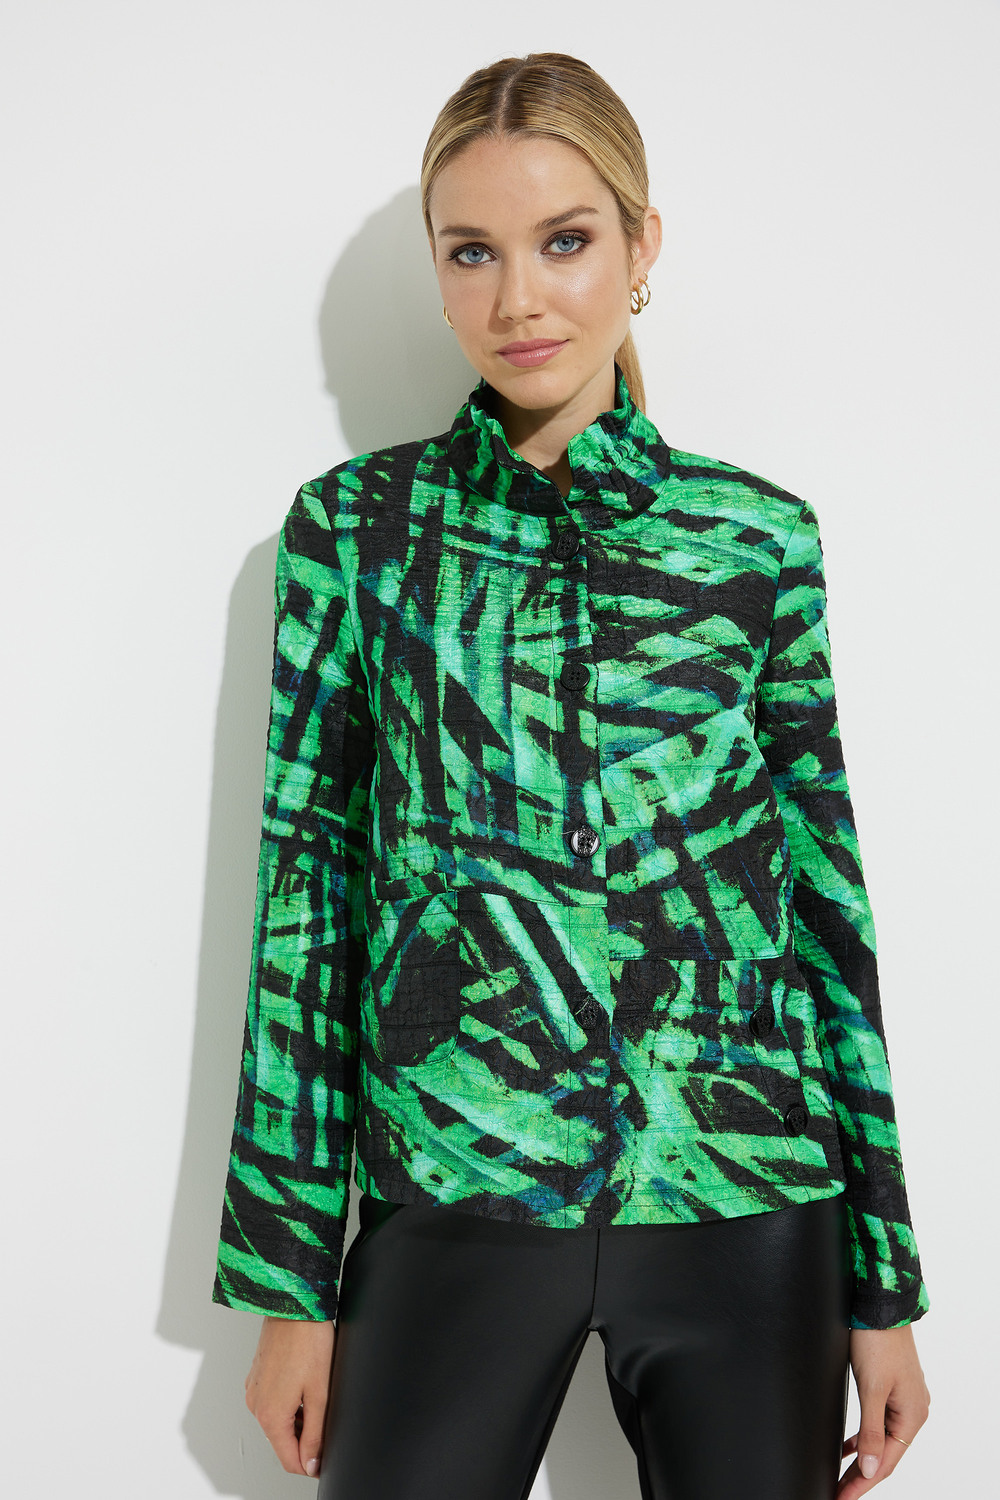 Joseph Ribkoff Palm Print Jacket Style 224002. Black/green/multi